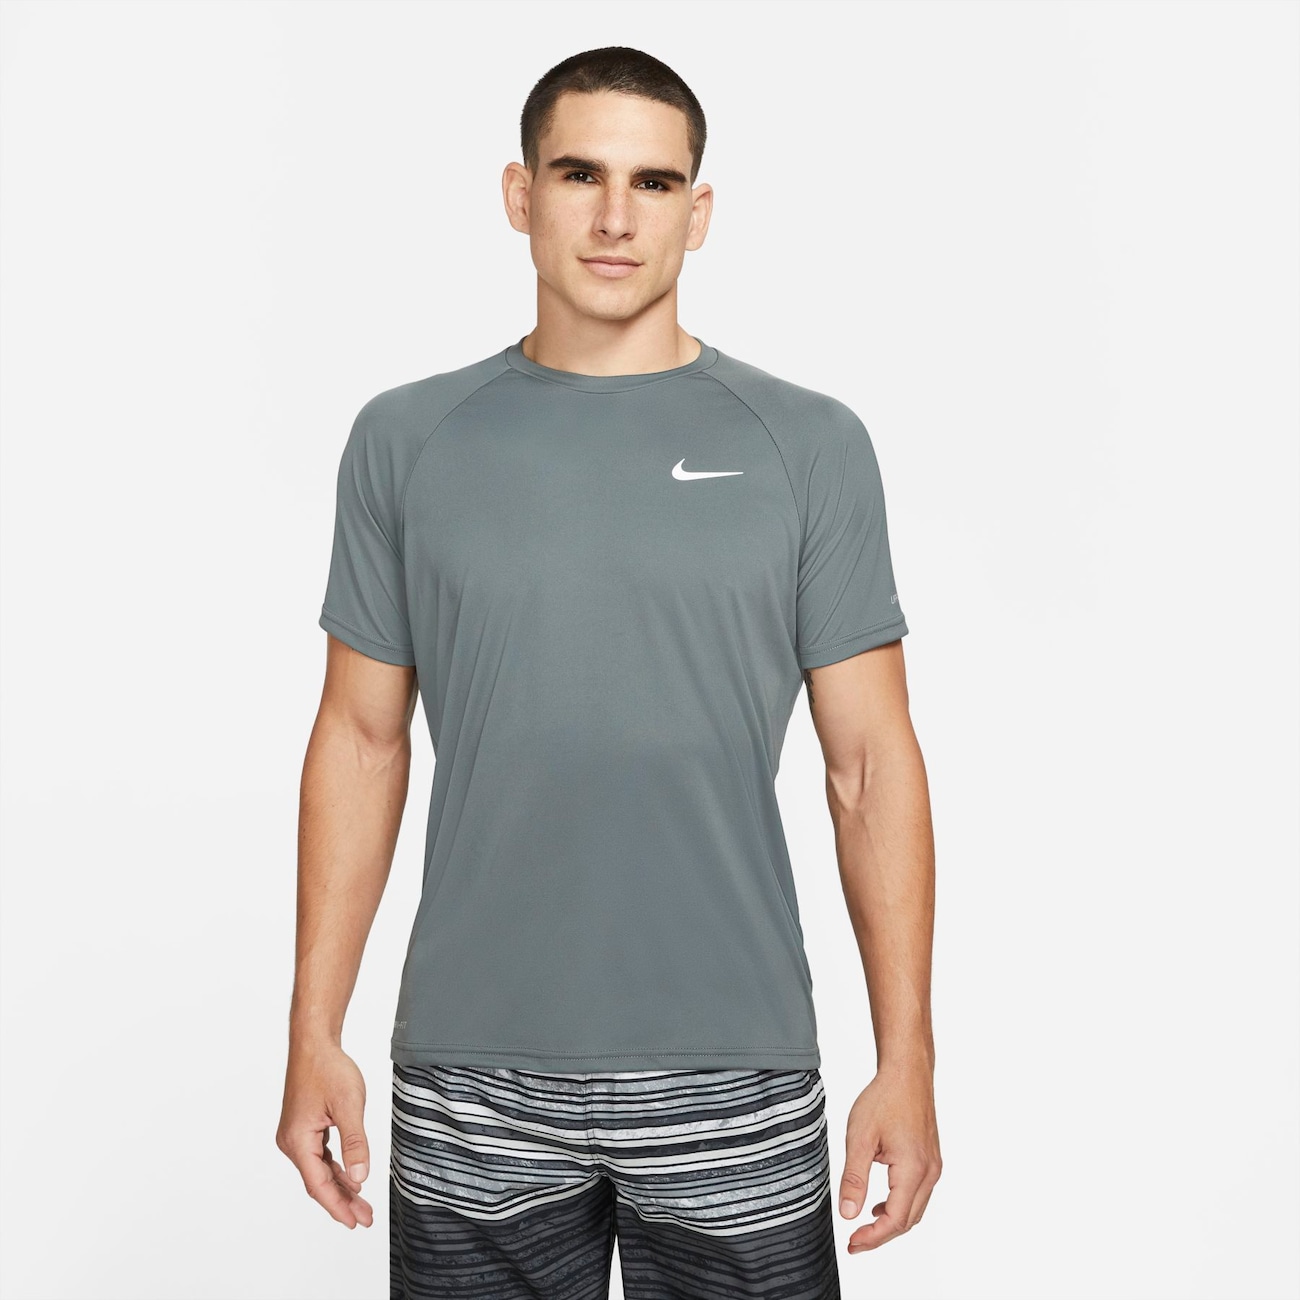 Camiseta Nike Essential Hydro Masculina